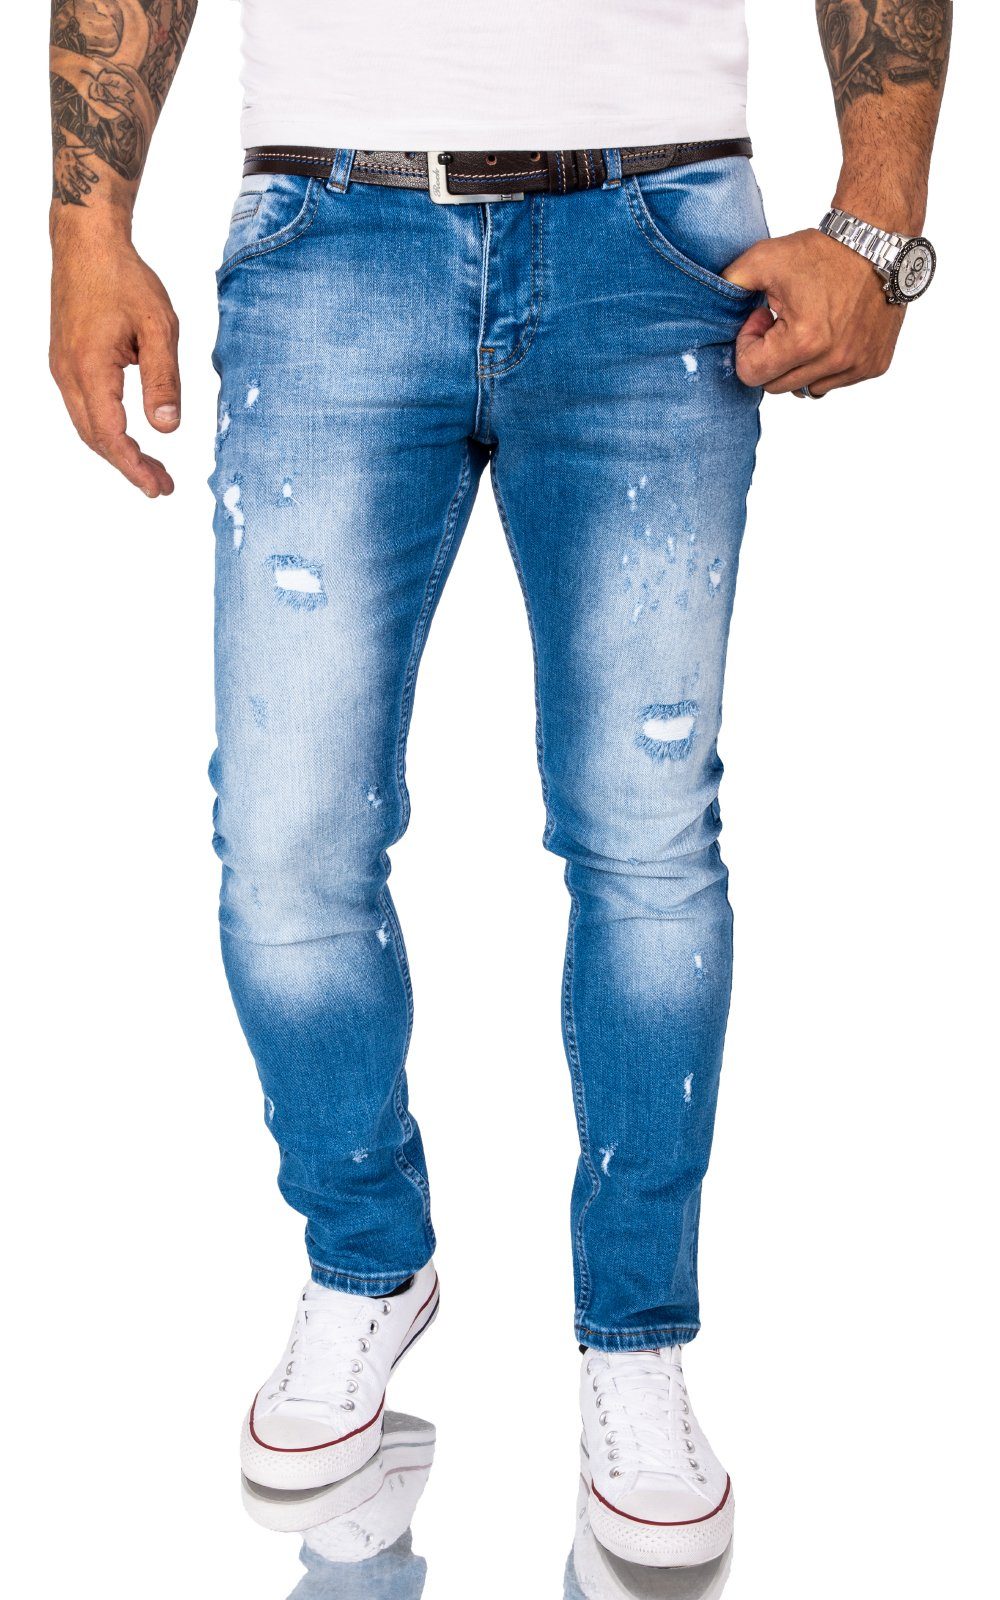 Gelverie Slim-fit-Jeans Herren Jeans Stonewashed Hellblau G-203